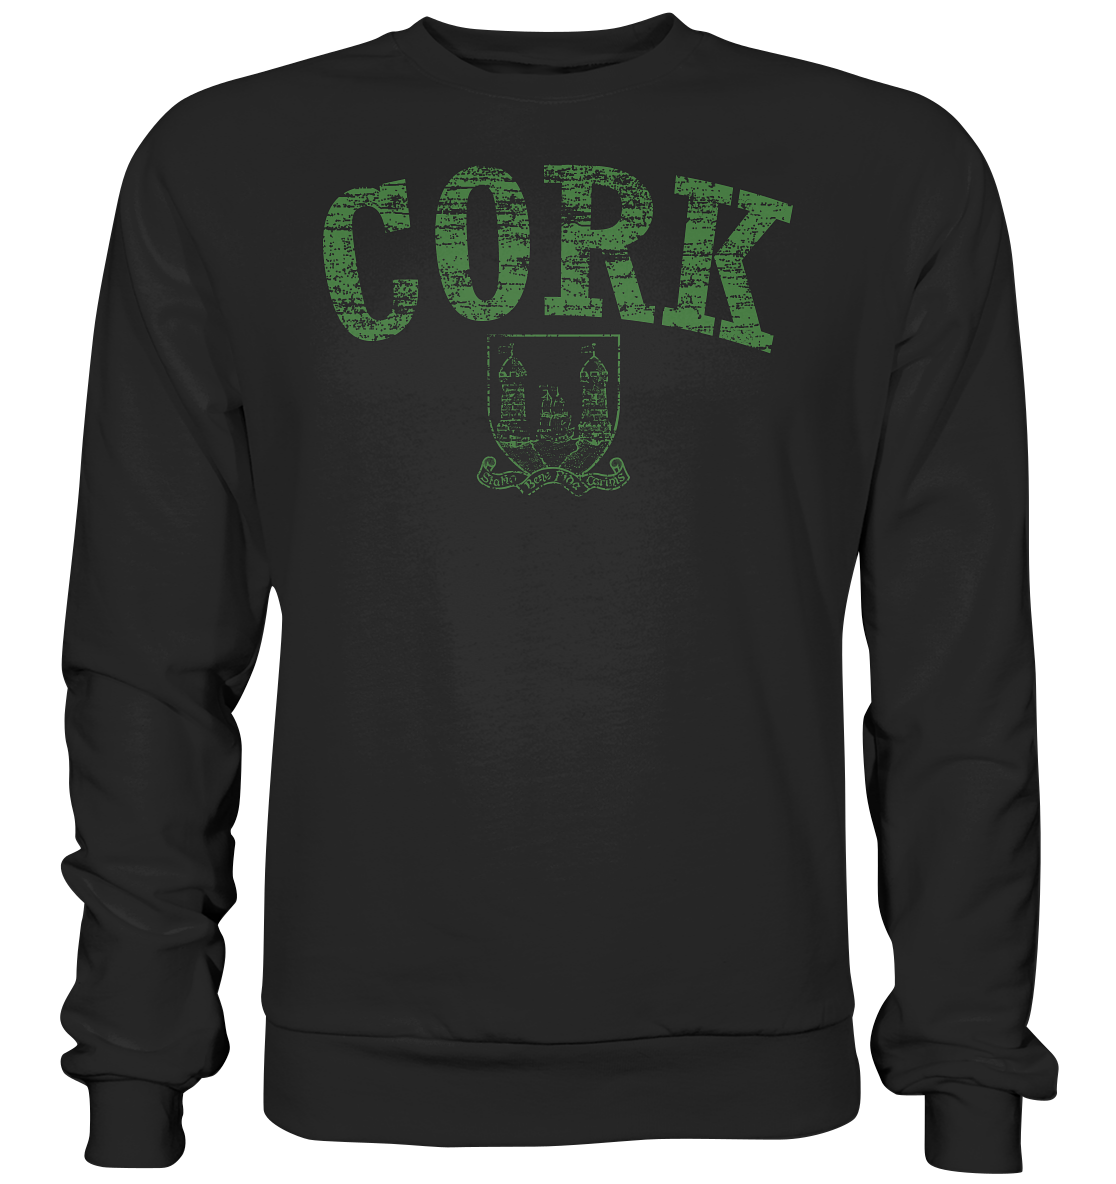 "Cork - Statio Bene Fida Carinis" - Premium Sweatshirt